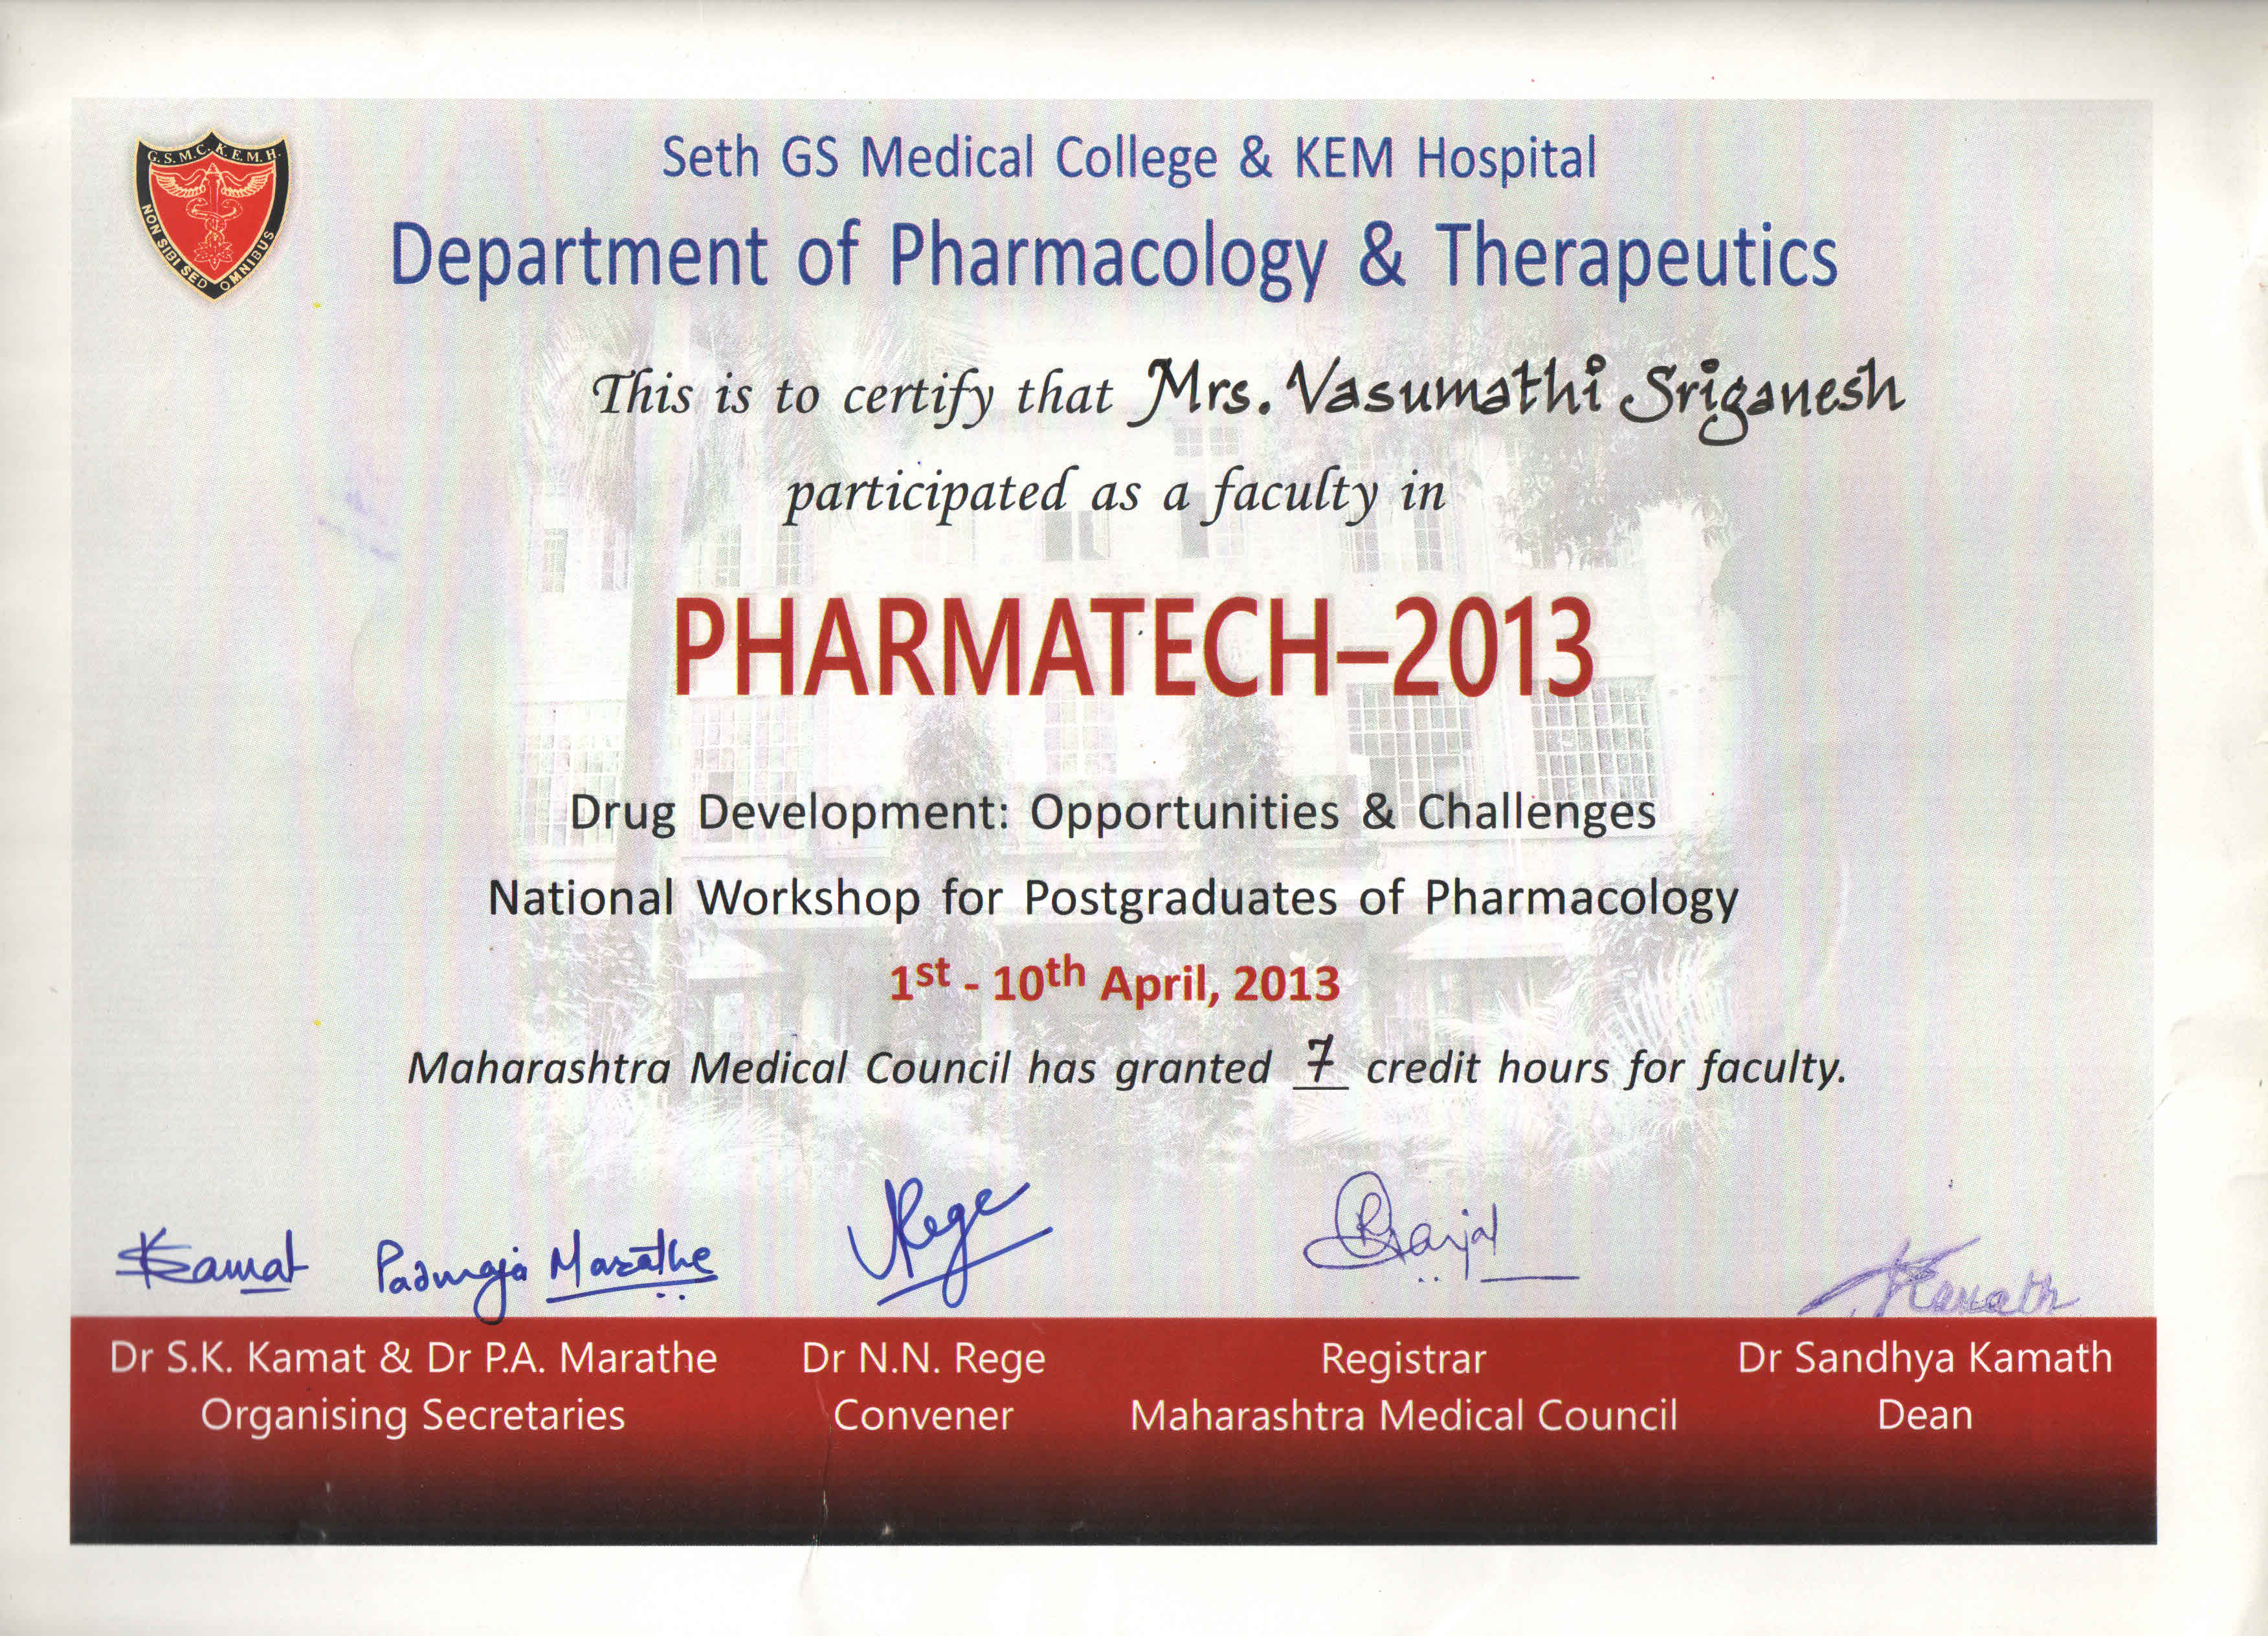 Seth GS Medical College & KEM Hospital-Lecture